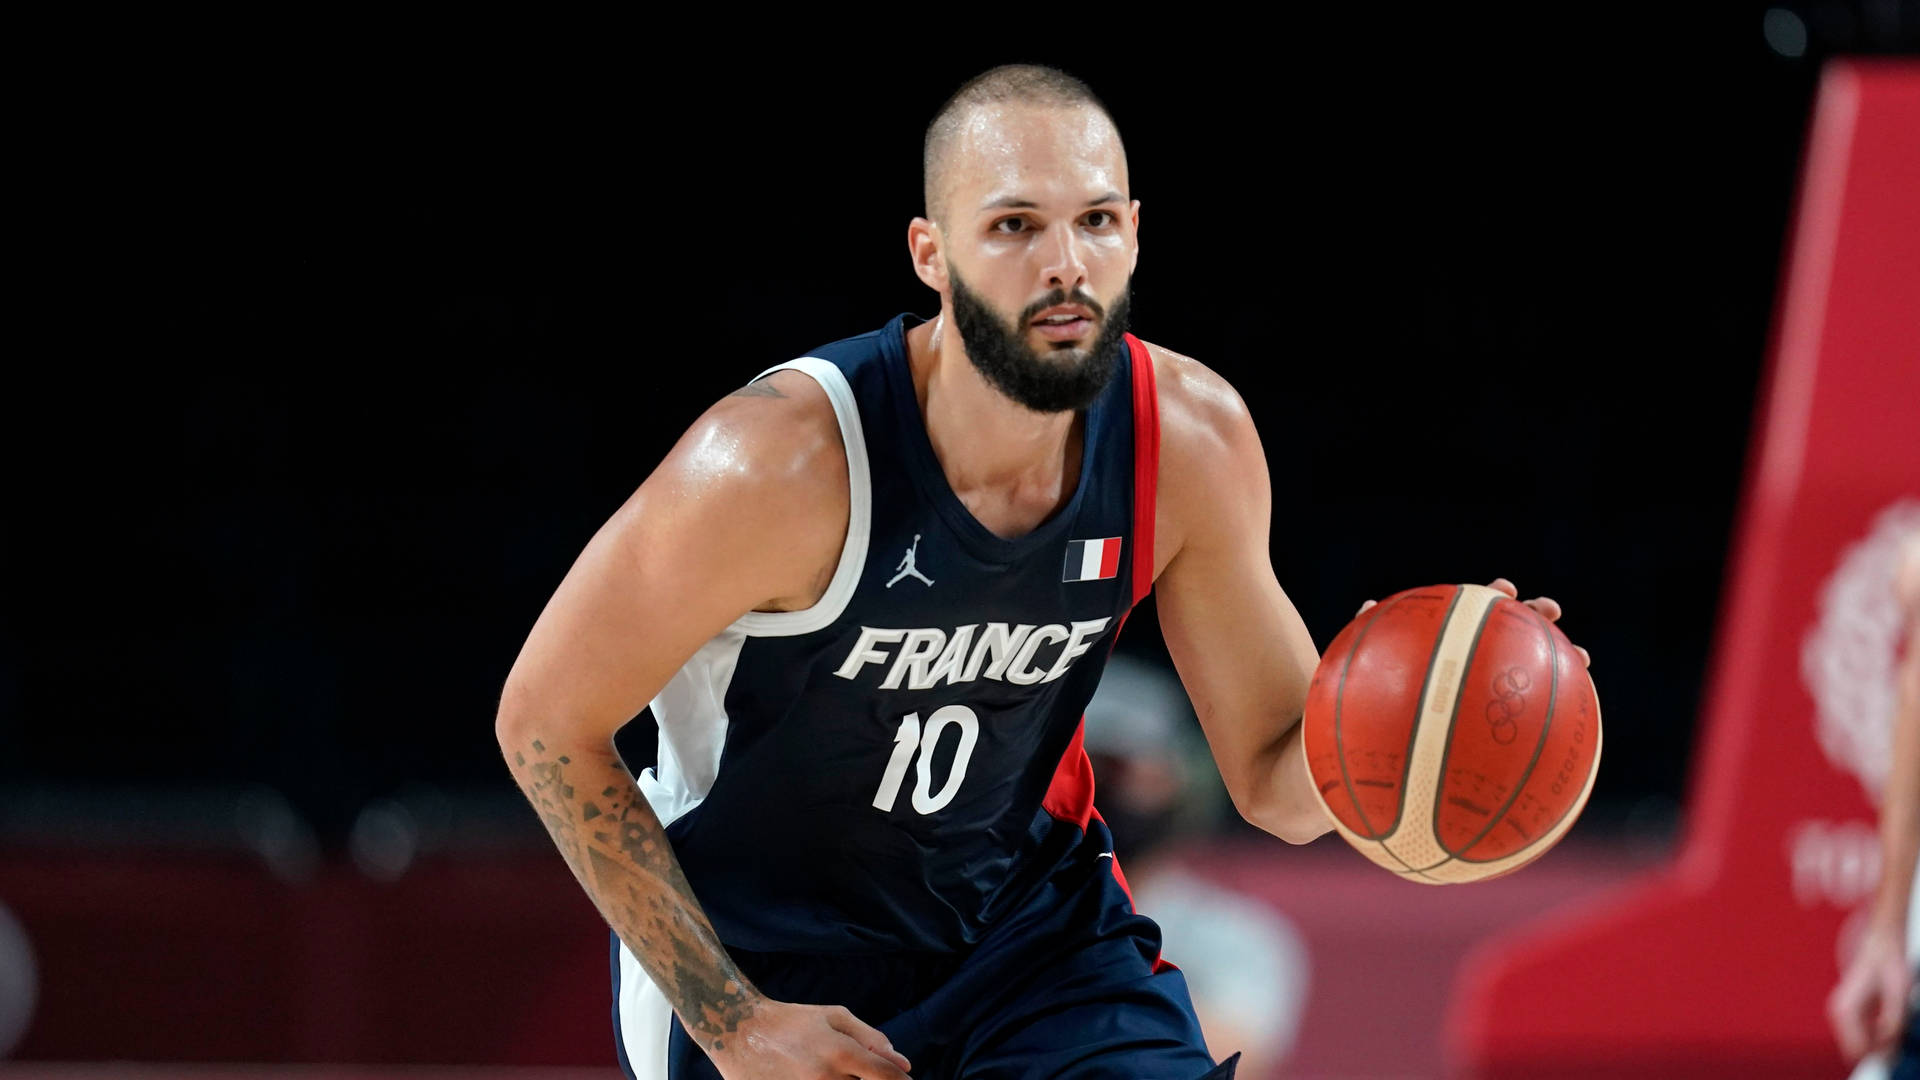 Evan Fournier France Basketball Player FIBA 2019 Wallpaper